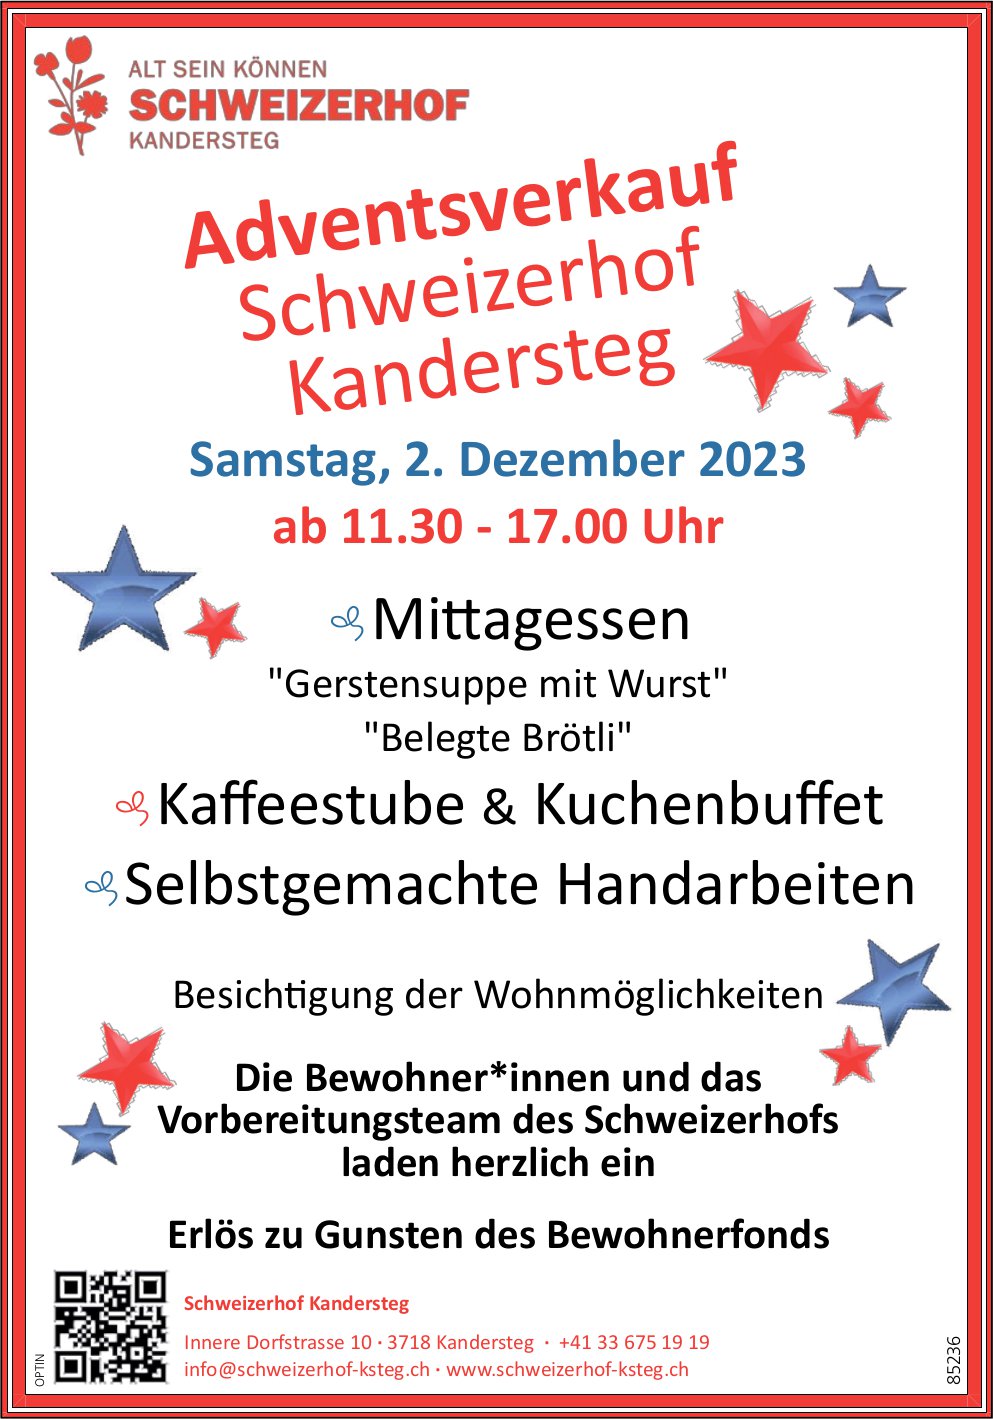 Adventsverkauf, 2. Dezember, Schweizerhof, Kandersteg